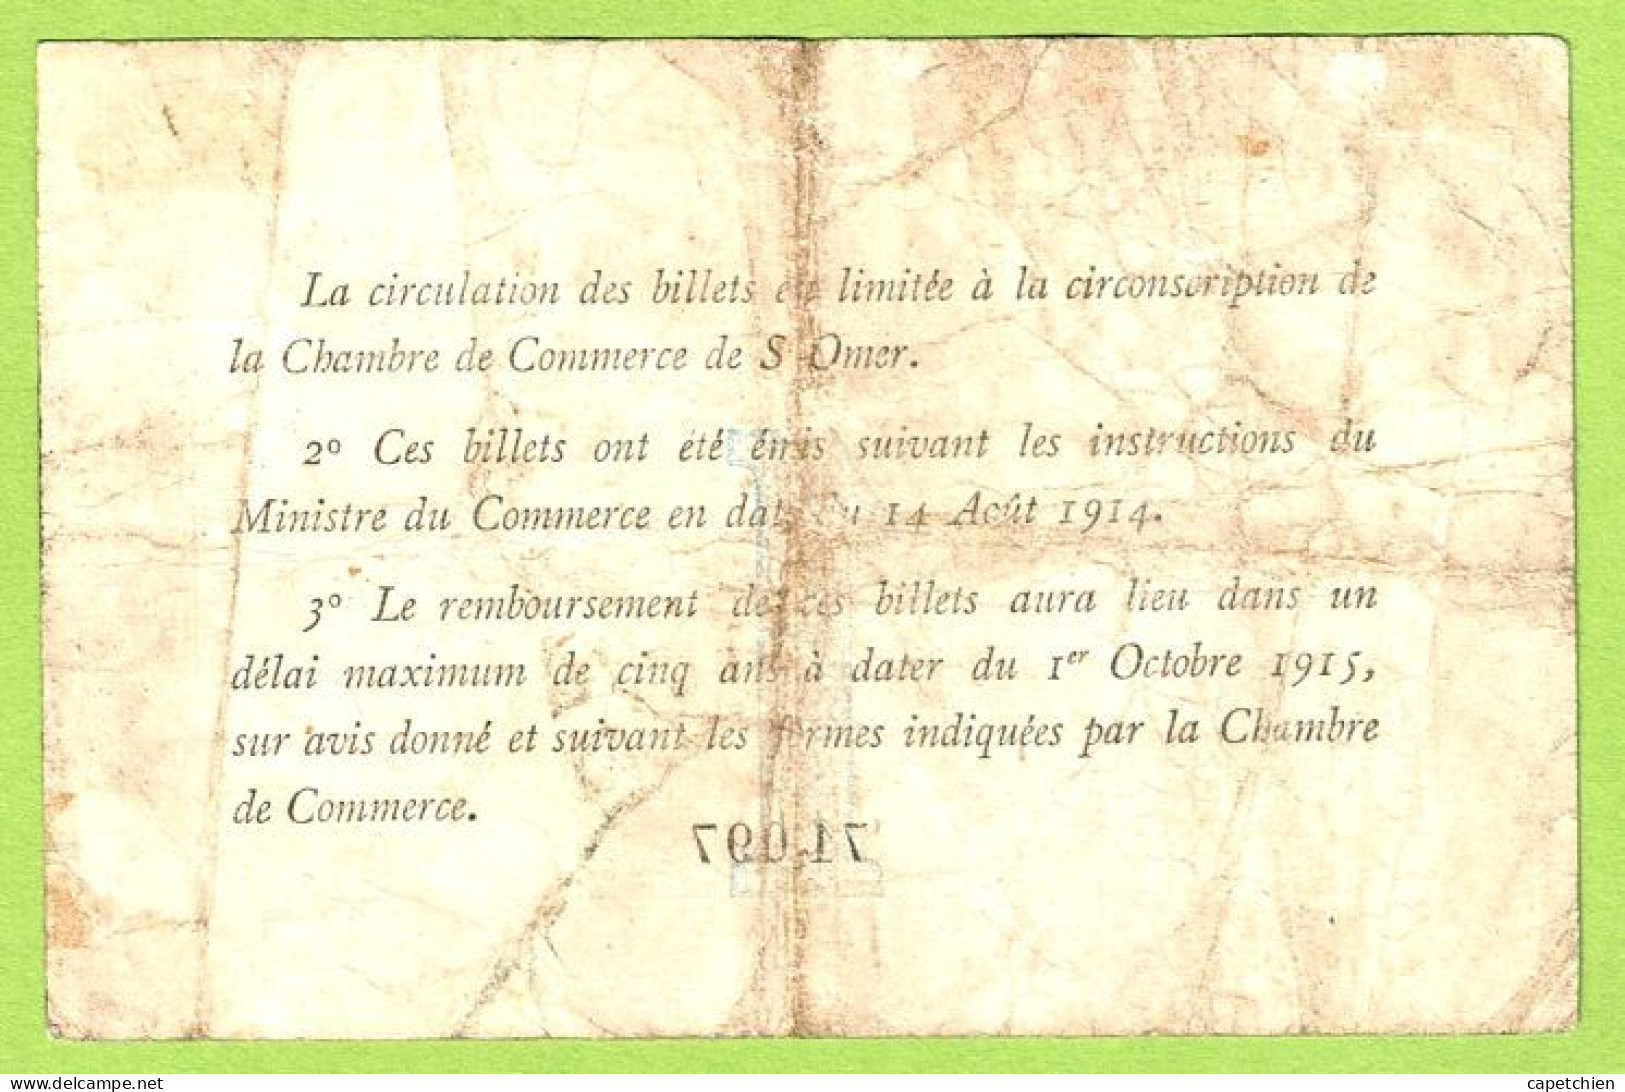 FRANCE / CHAMBRE De COMMERCE / SAINT OMER / 1 FRANC / 14 AOUT 1914 / PAS De N° De SERIE  / N° 71097 - Chambre De Commerce